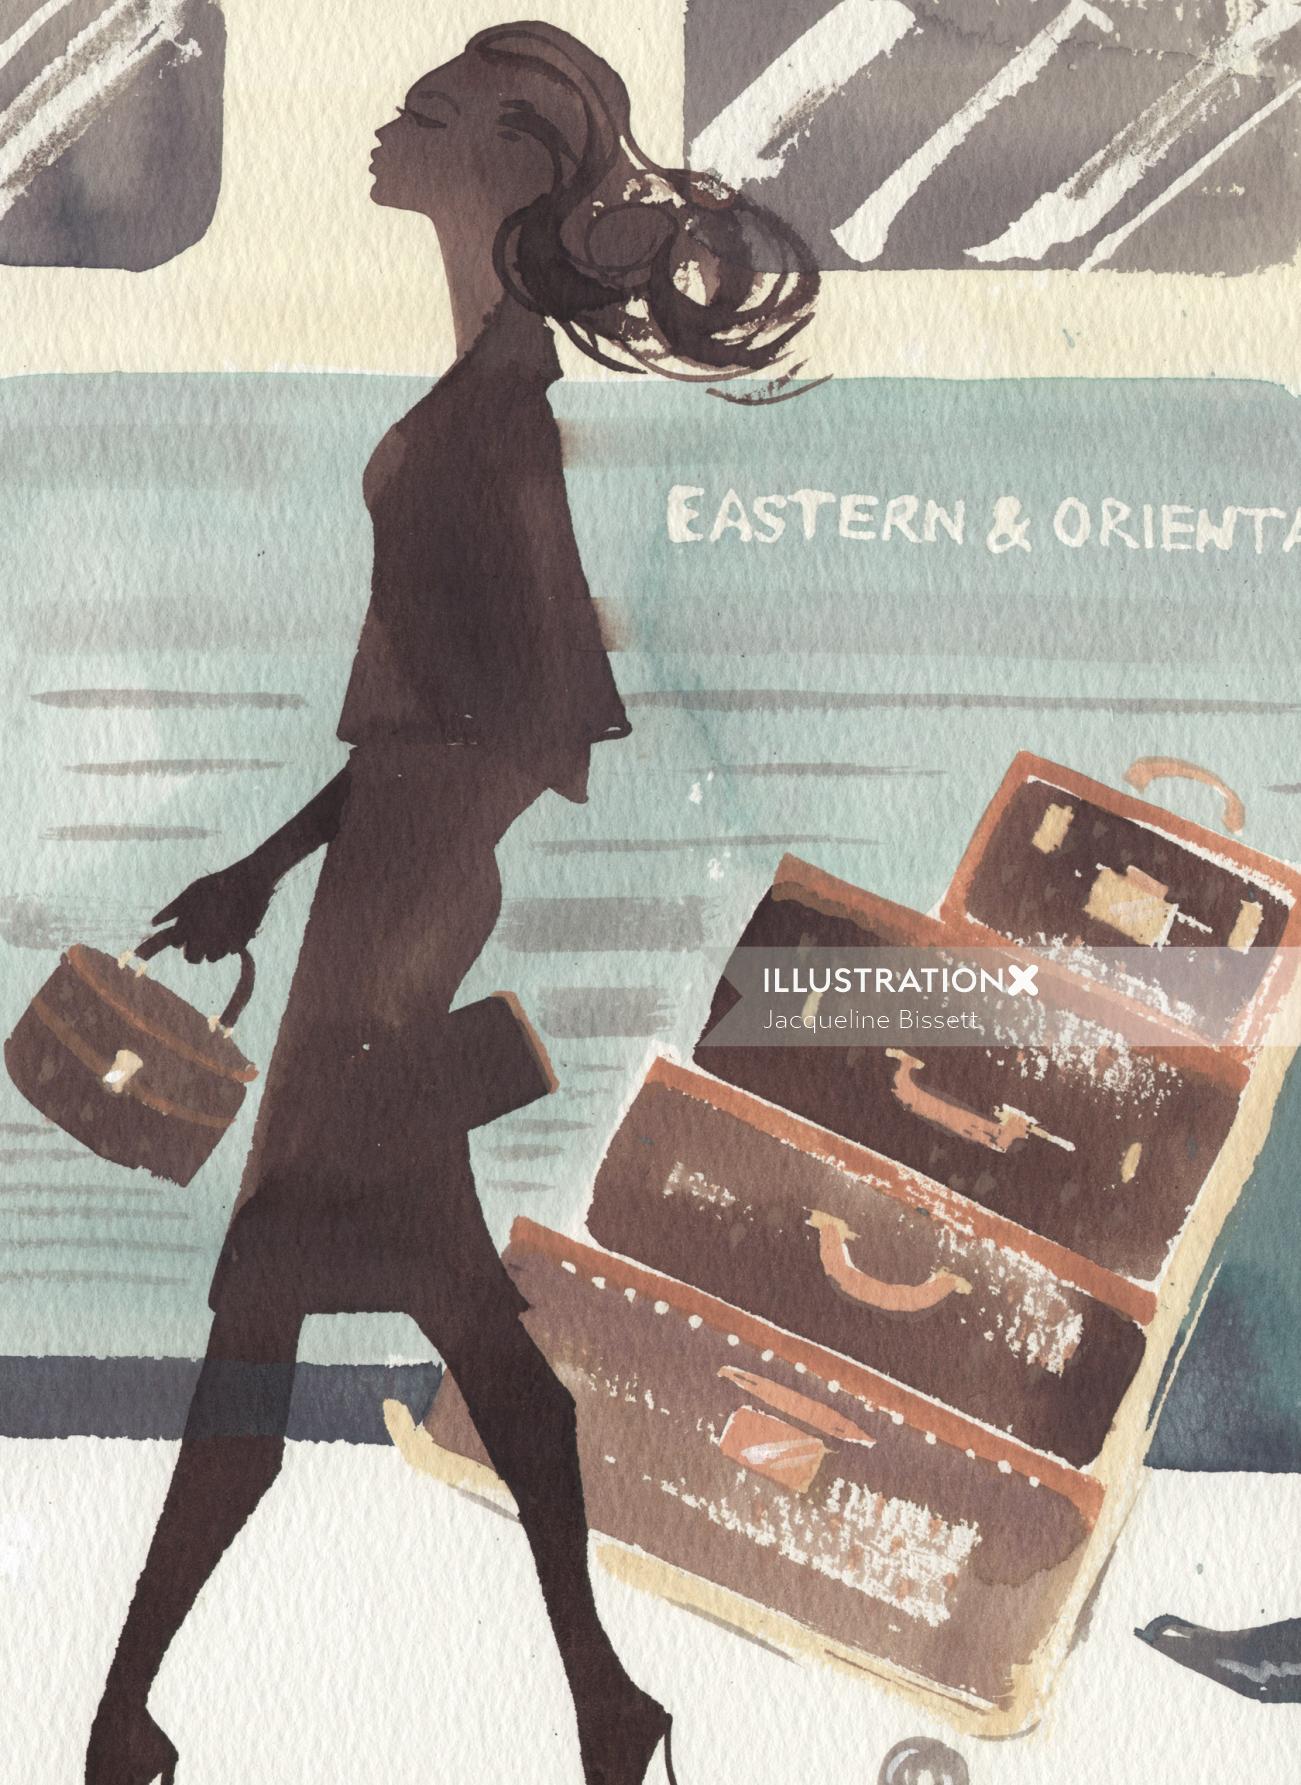 Illustration for Orient Express magazine